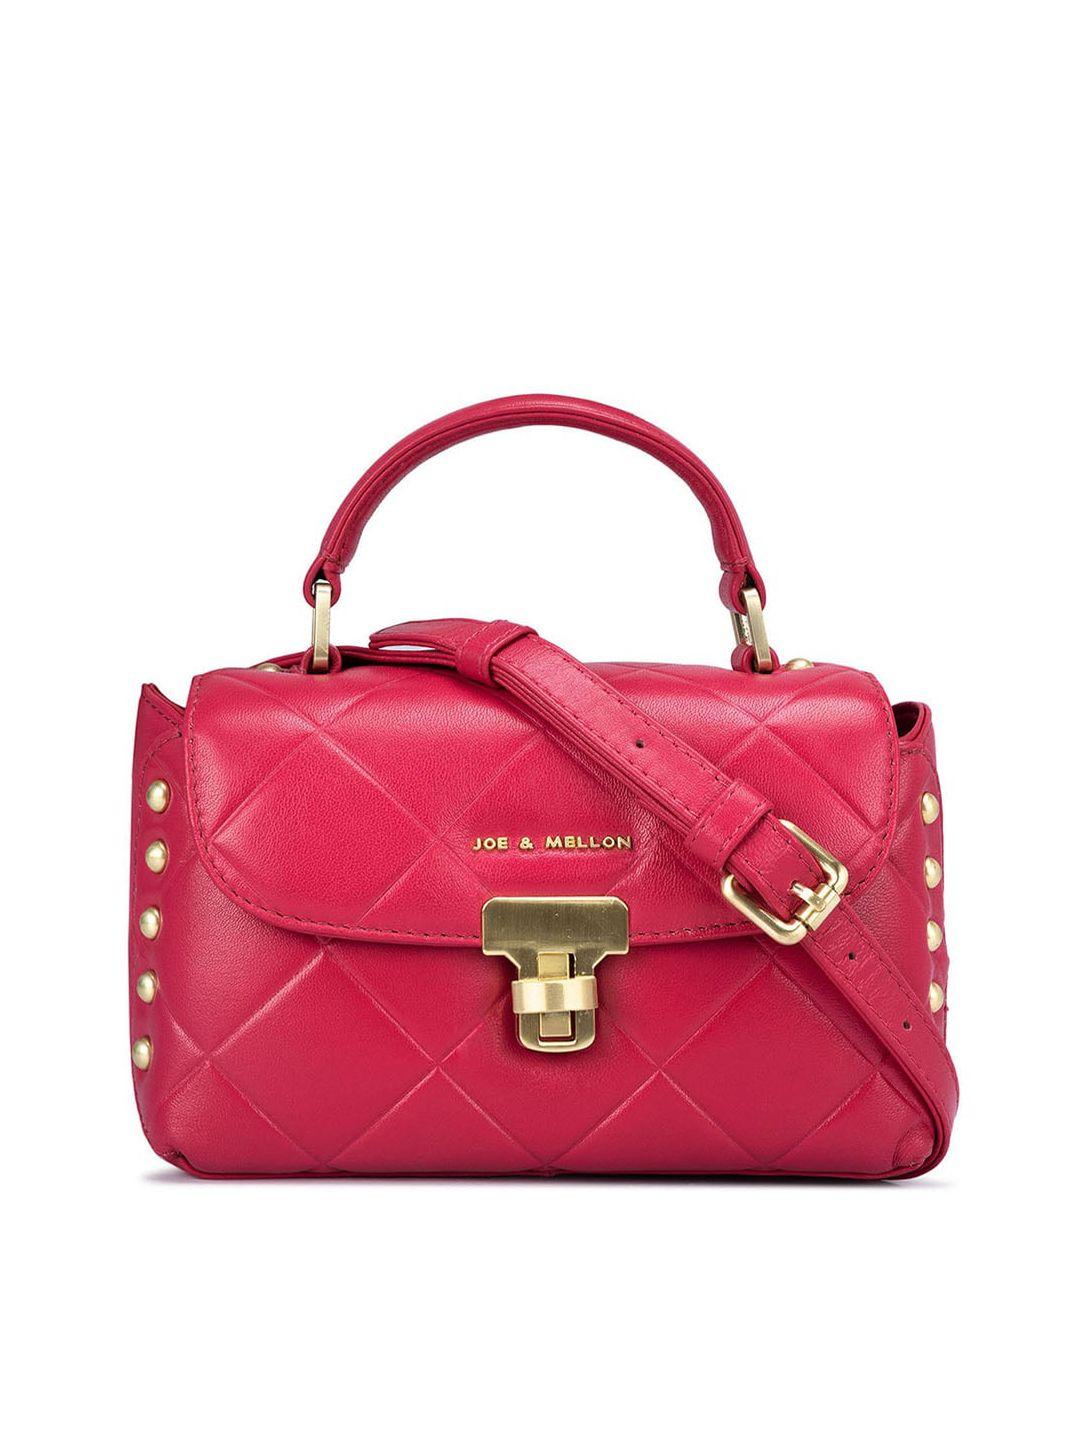 joe & mellon pink leather structured satchel